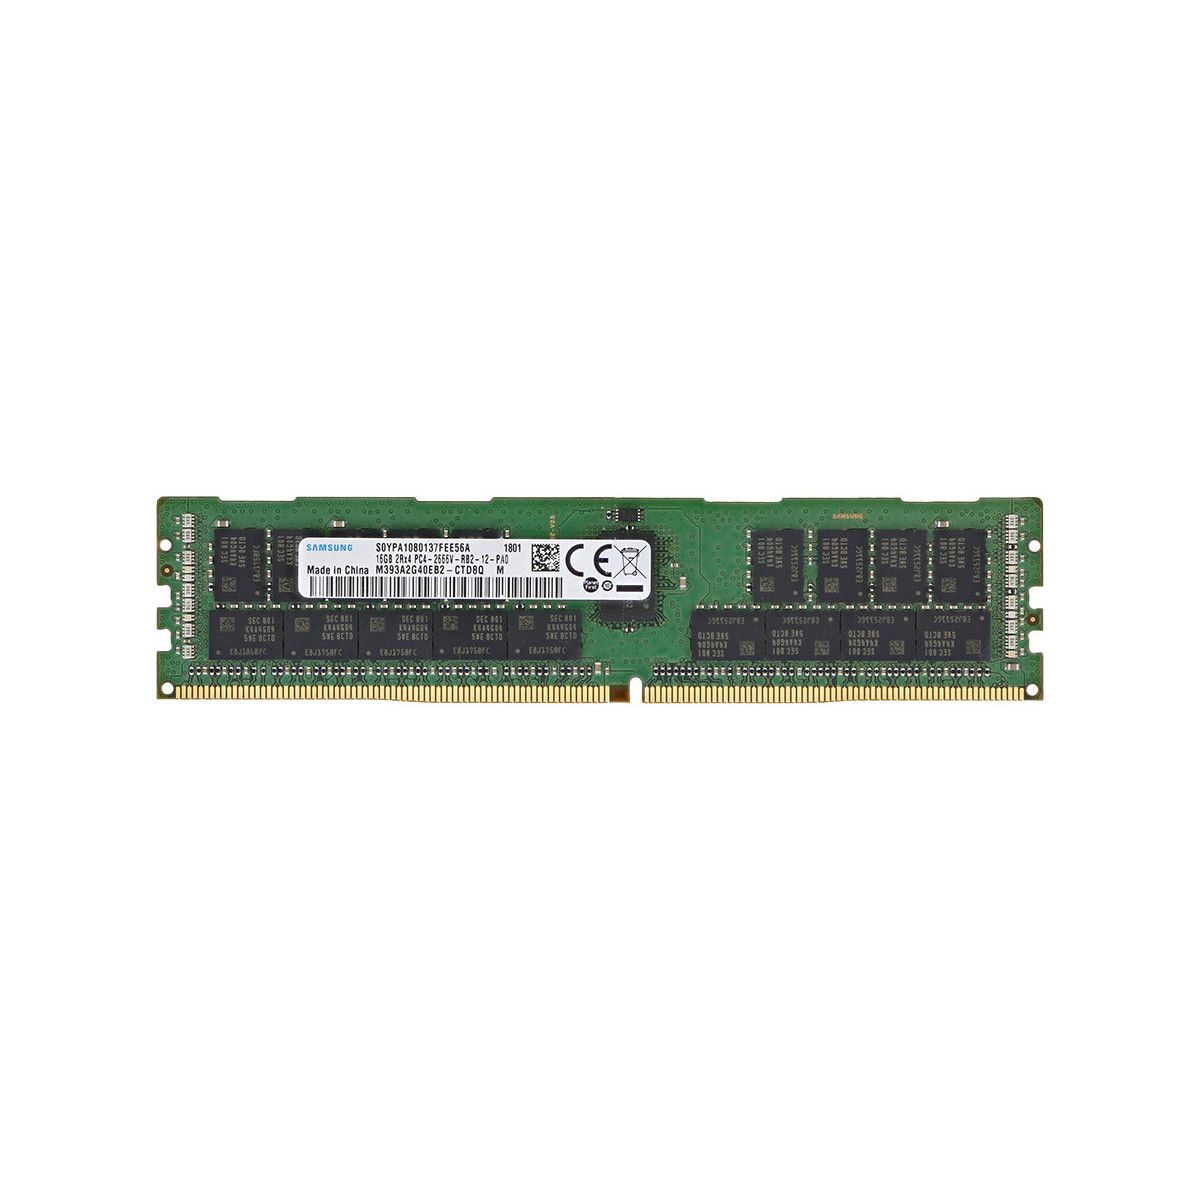 7115347-MS - Memstar 1x 16GB DDR4-2666 RDIMM PC4-21300V-R